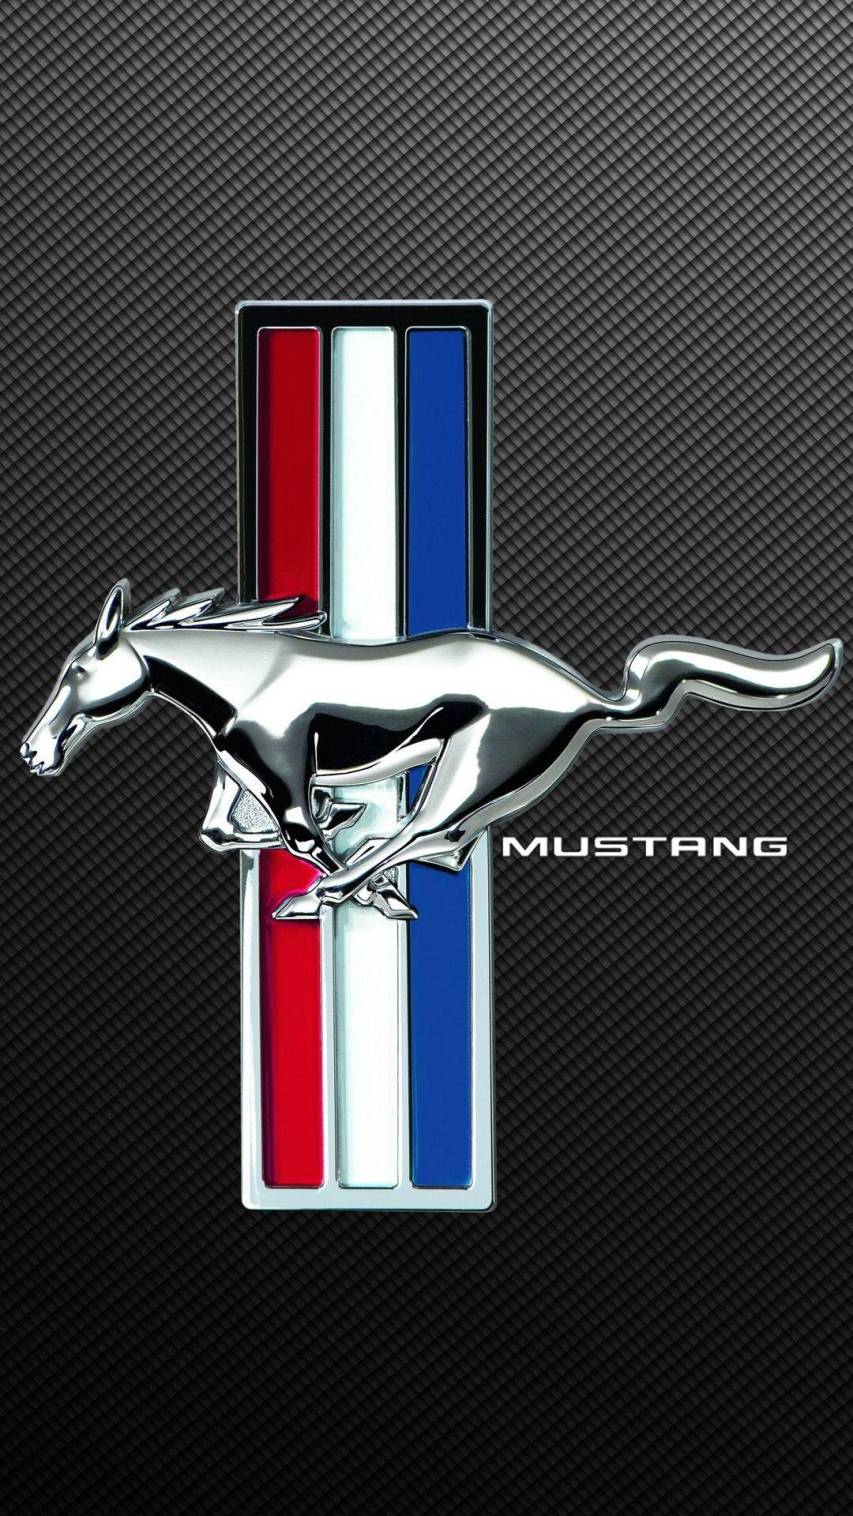 Dark Background Mustang logo iPhone Wallpapers